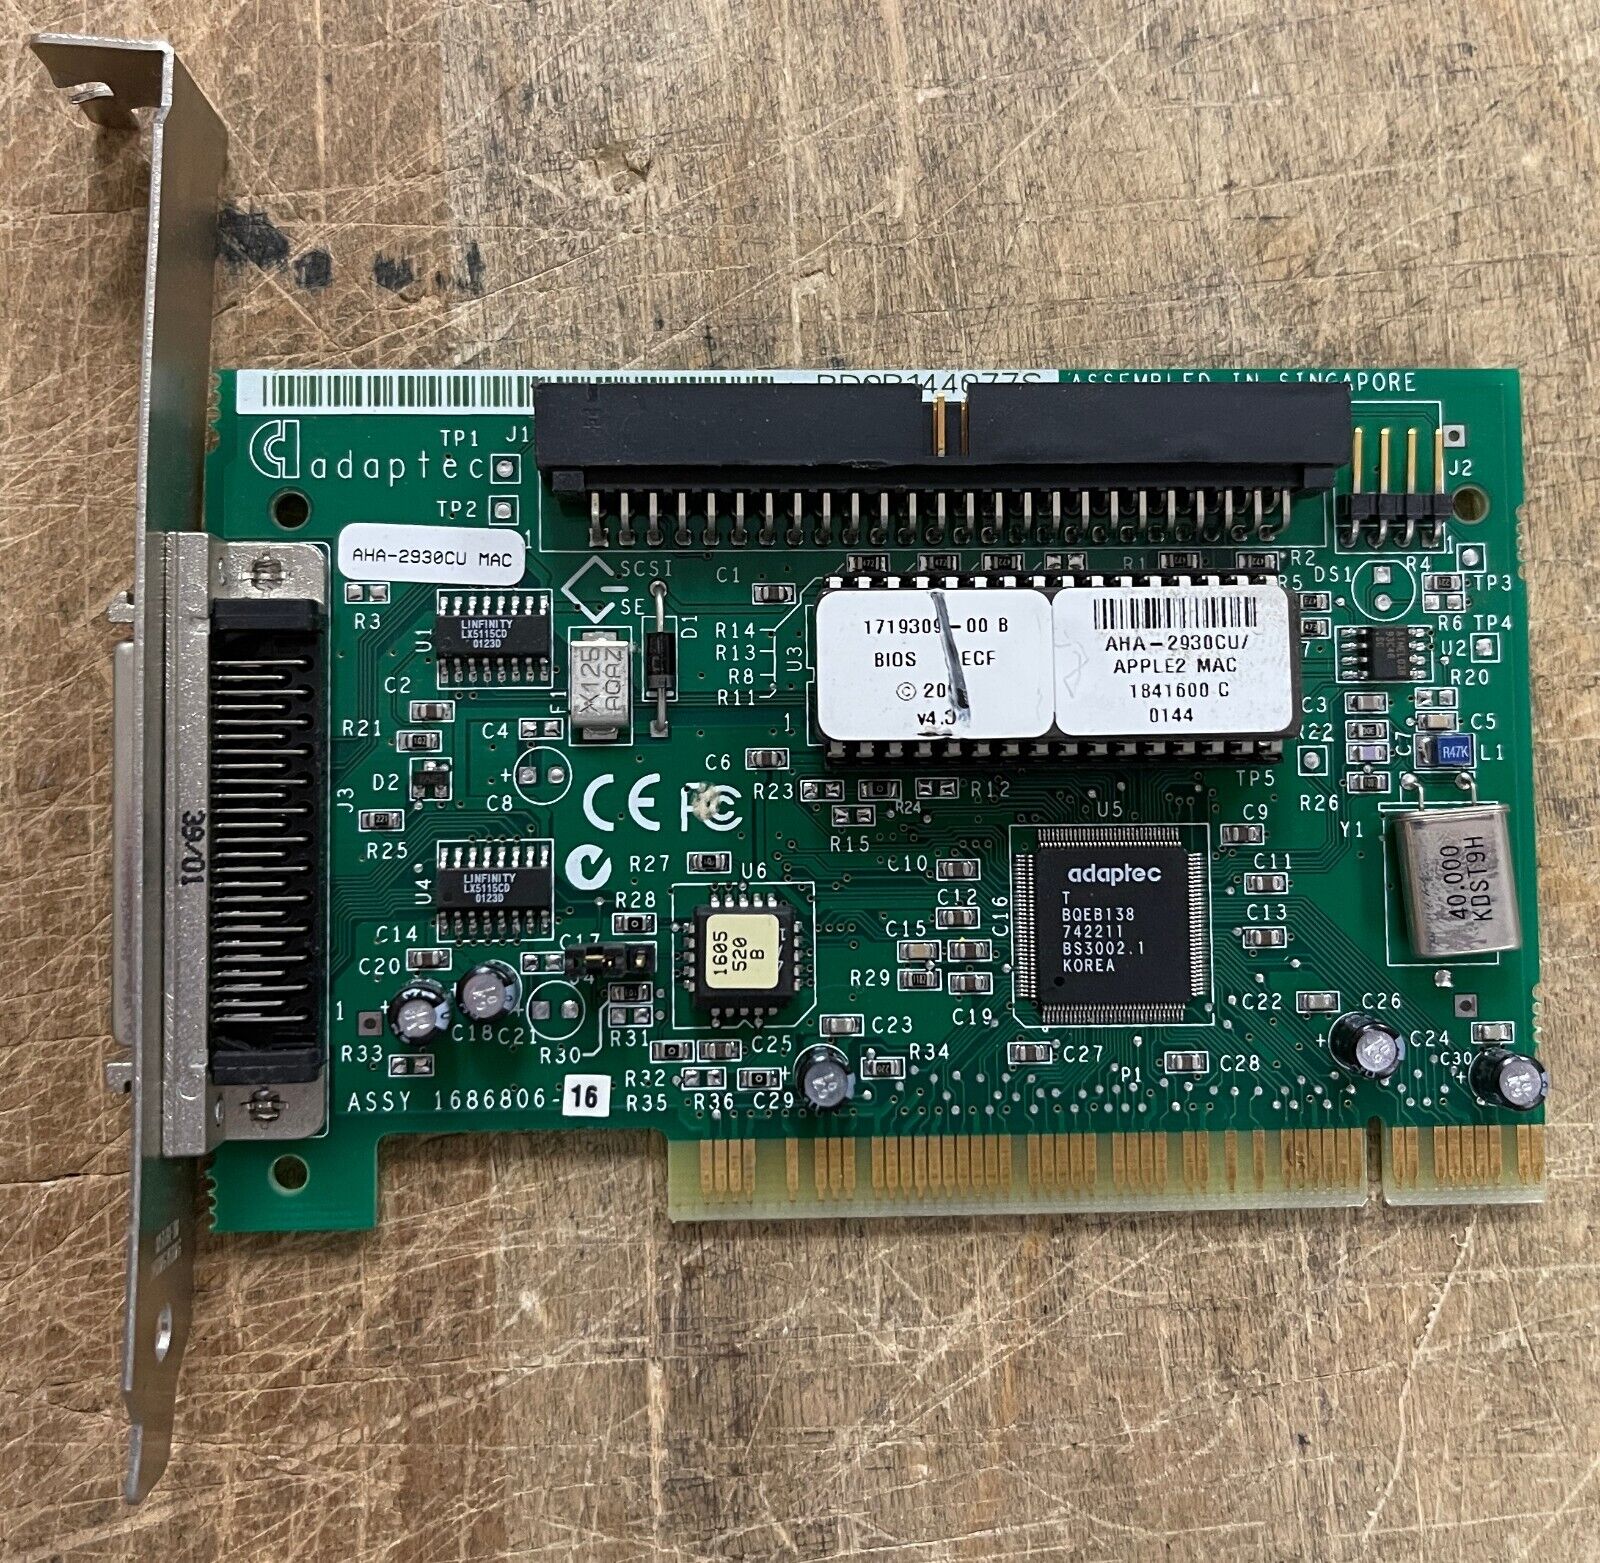 Vintage Apple Adaptec AHA-2930CU MAC SCSI-1 to SCSI-2 PCI Card